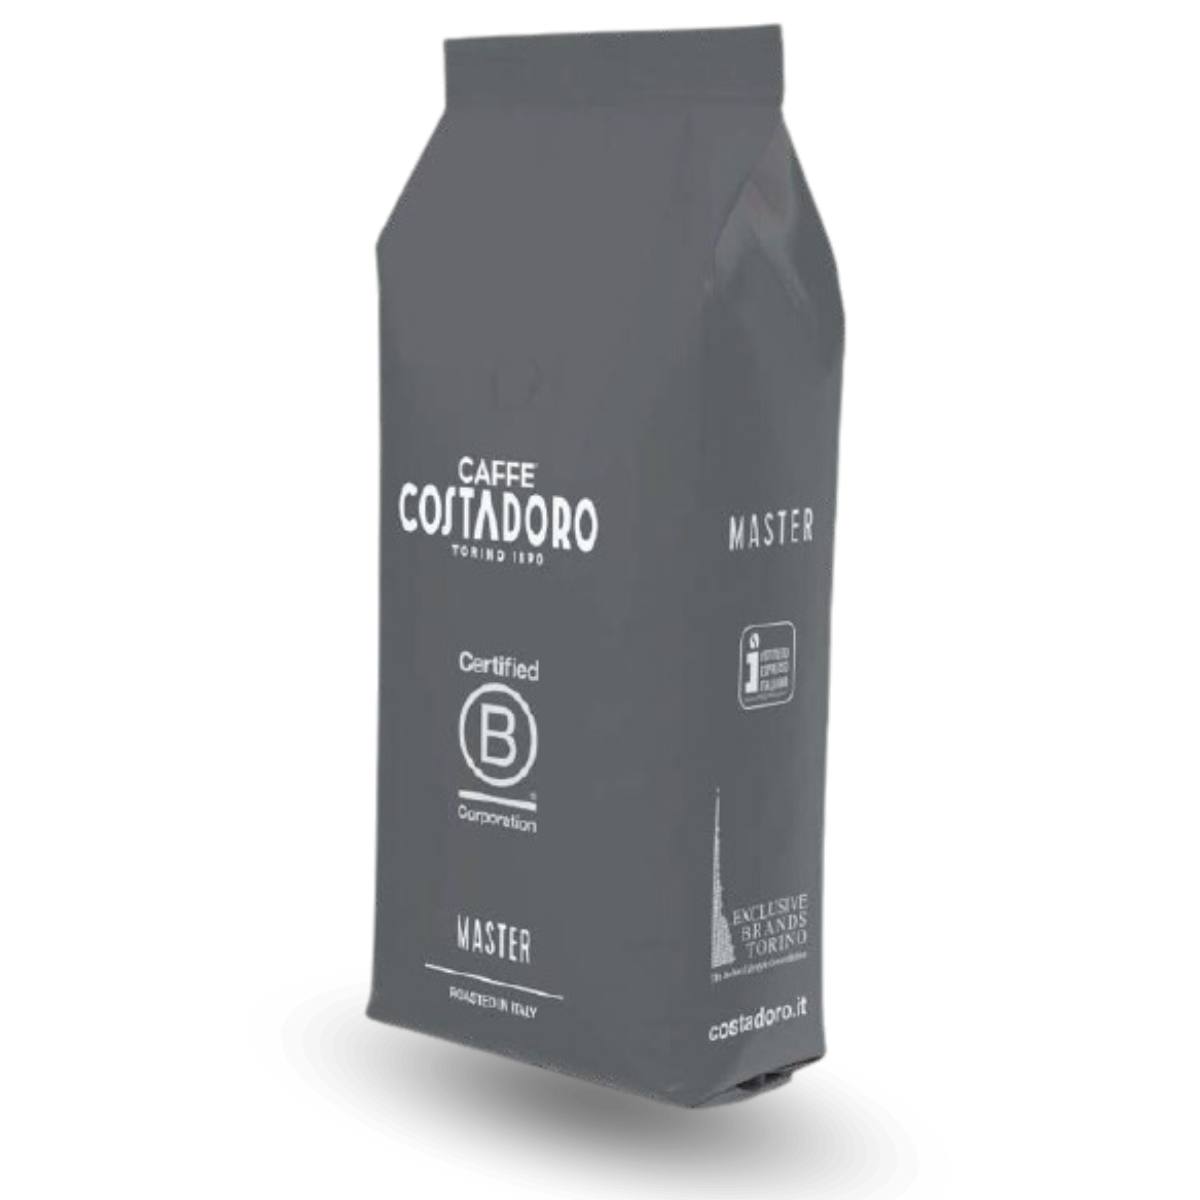 Costadoro Master Espresso 1000g Bohnen